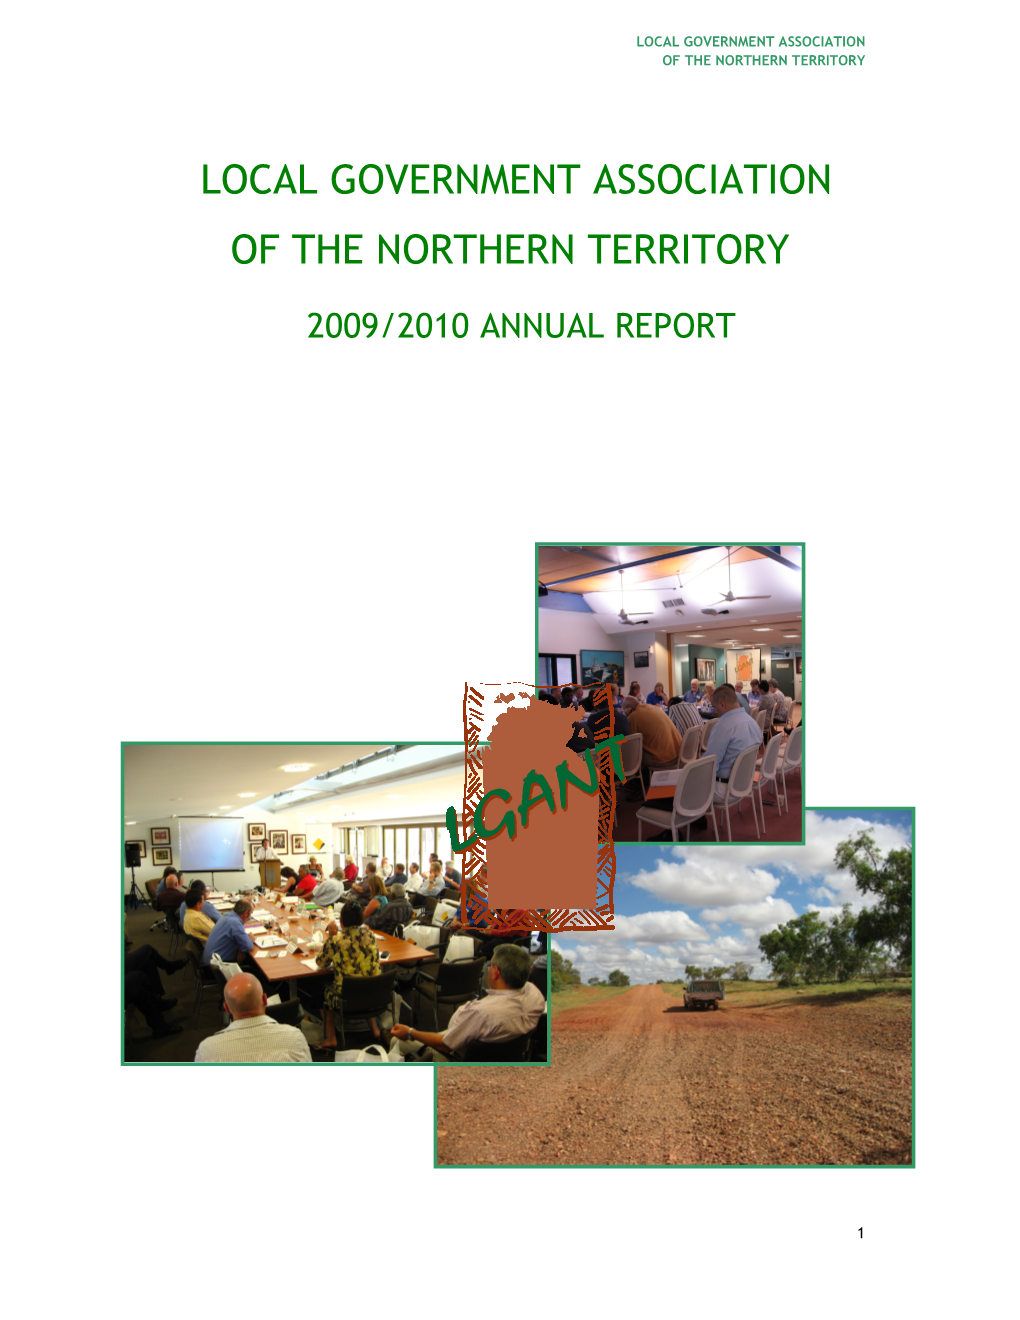 Annual Report 2009 – 2010